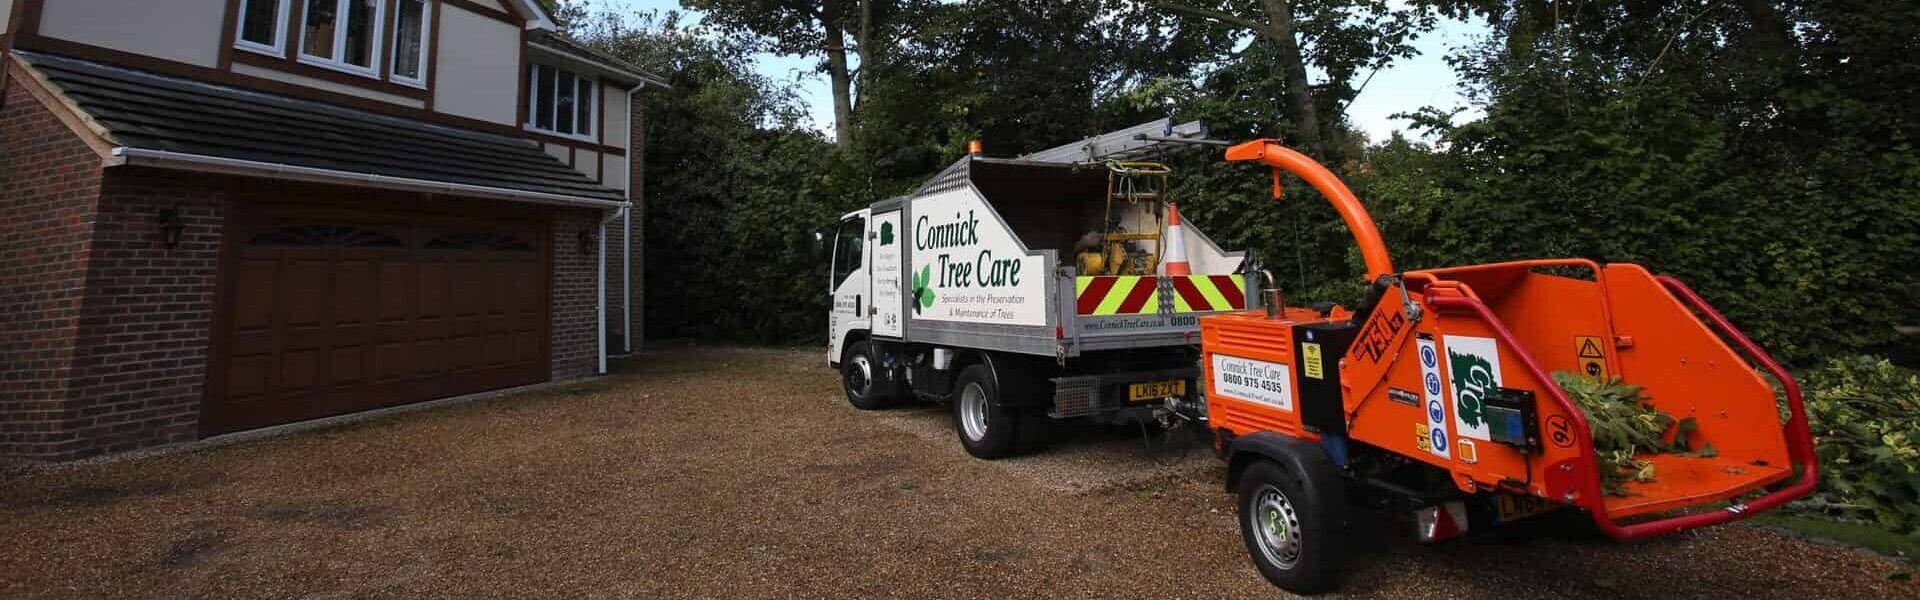 Connick Tree Care van